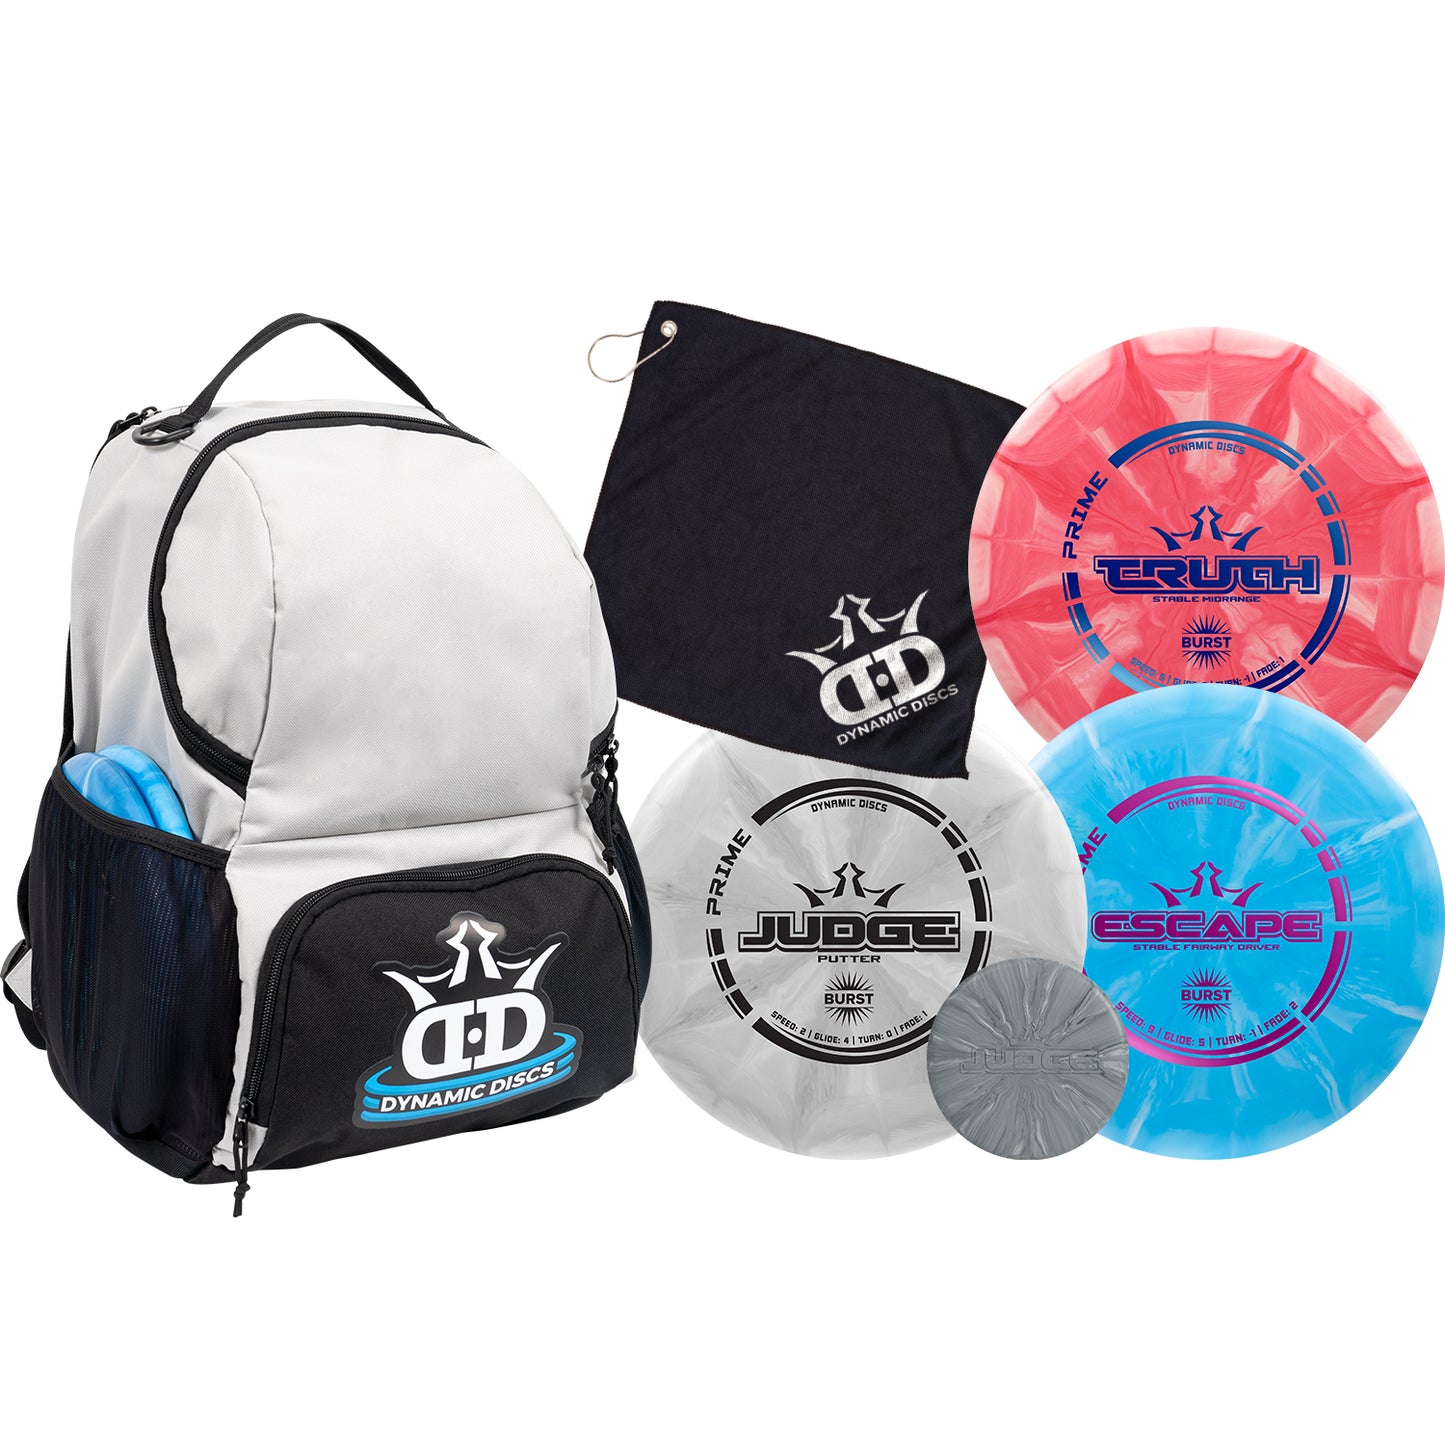 Disc Golf Set with 6 Discs and Mini Disc,Starter Disc Golf Bag,Towel